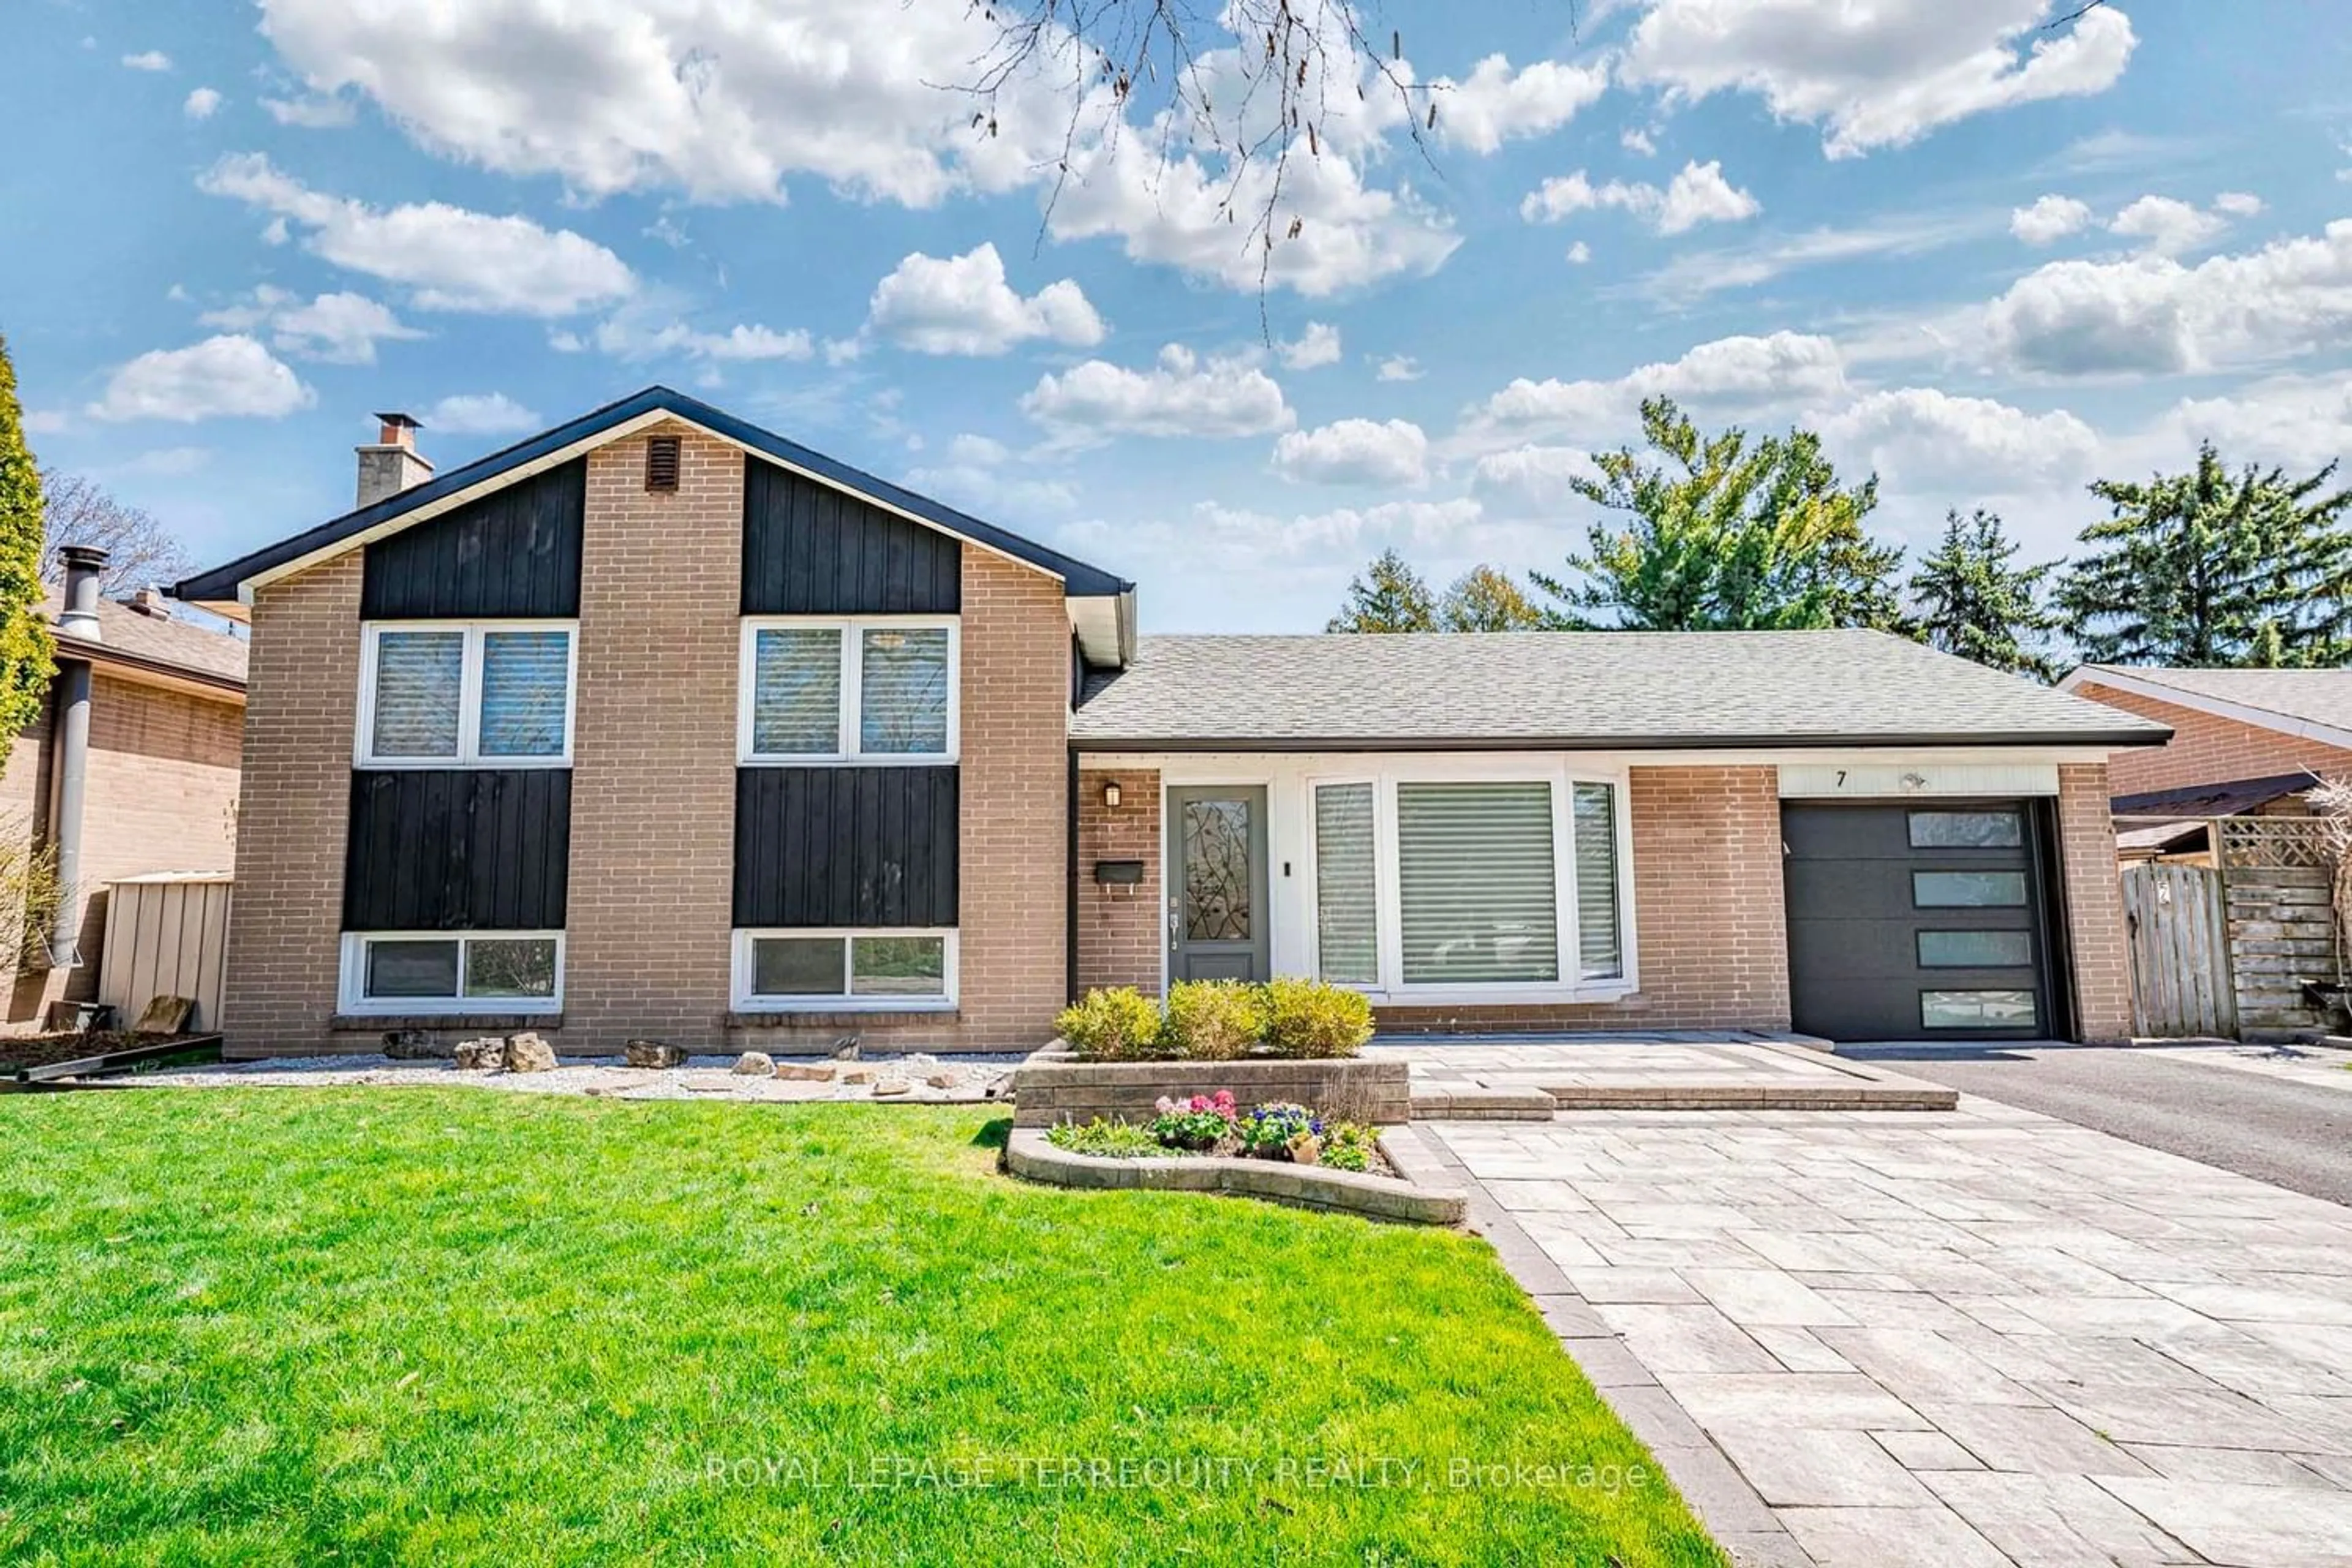 Home with brick exterior material for 7 Treadgold Cres, Toronto Ontario M3A 1X1